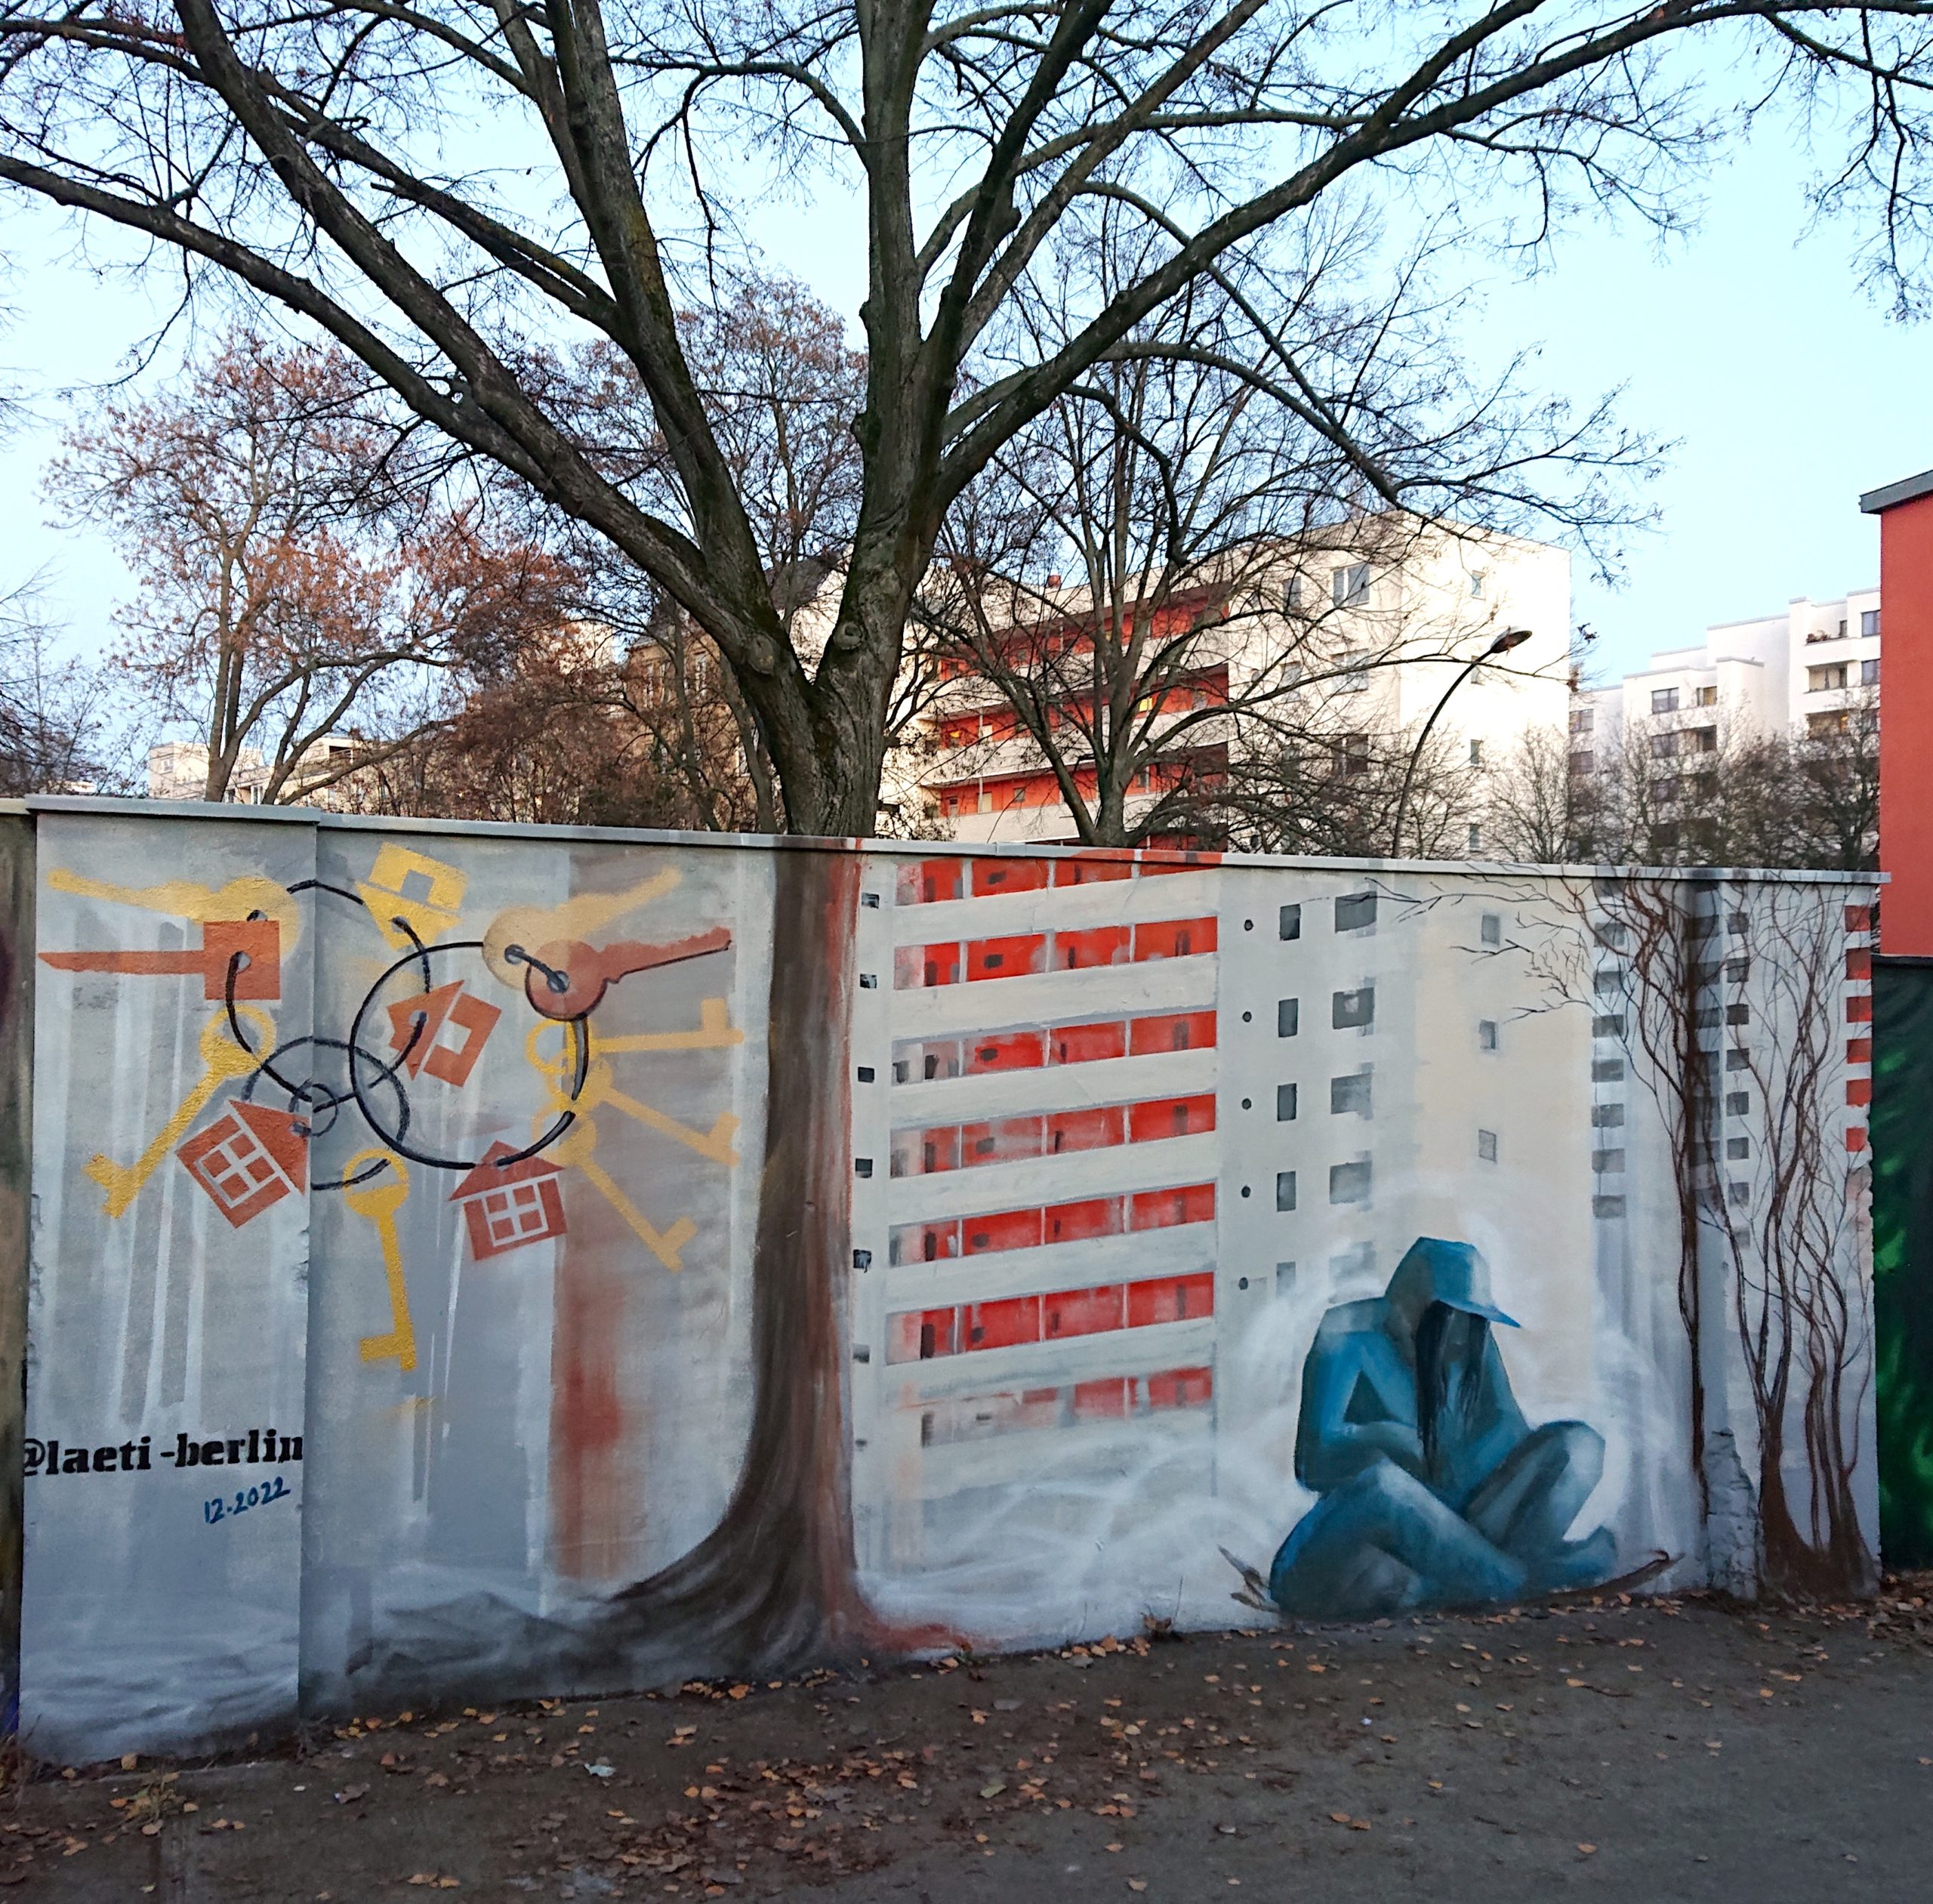 Wall Berlin- 12.2022, Armut-Reichtum, North Side Gallery